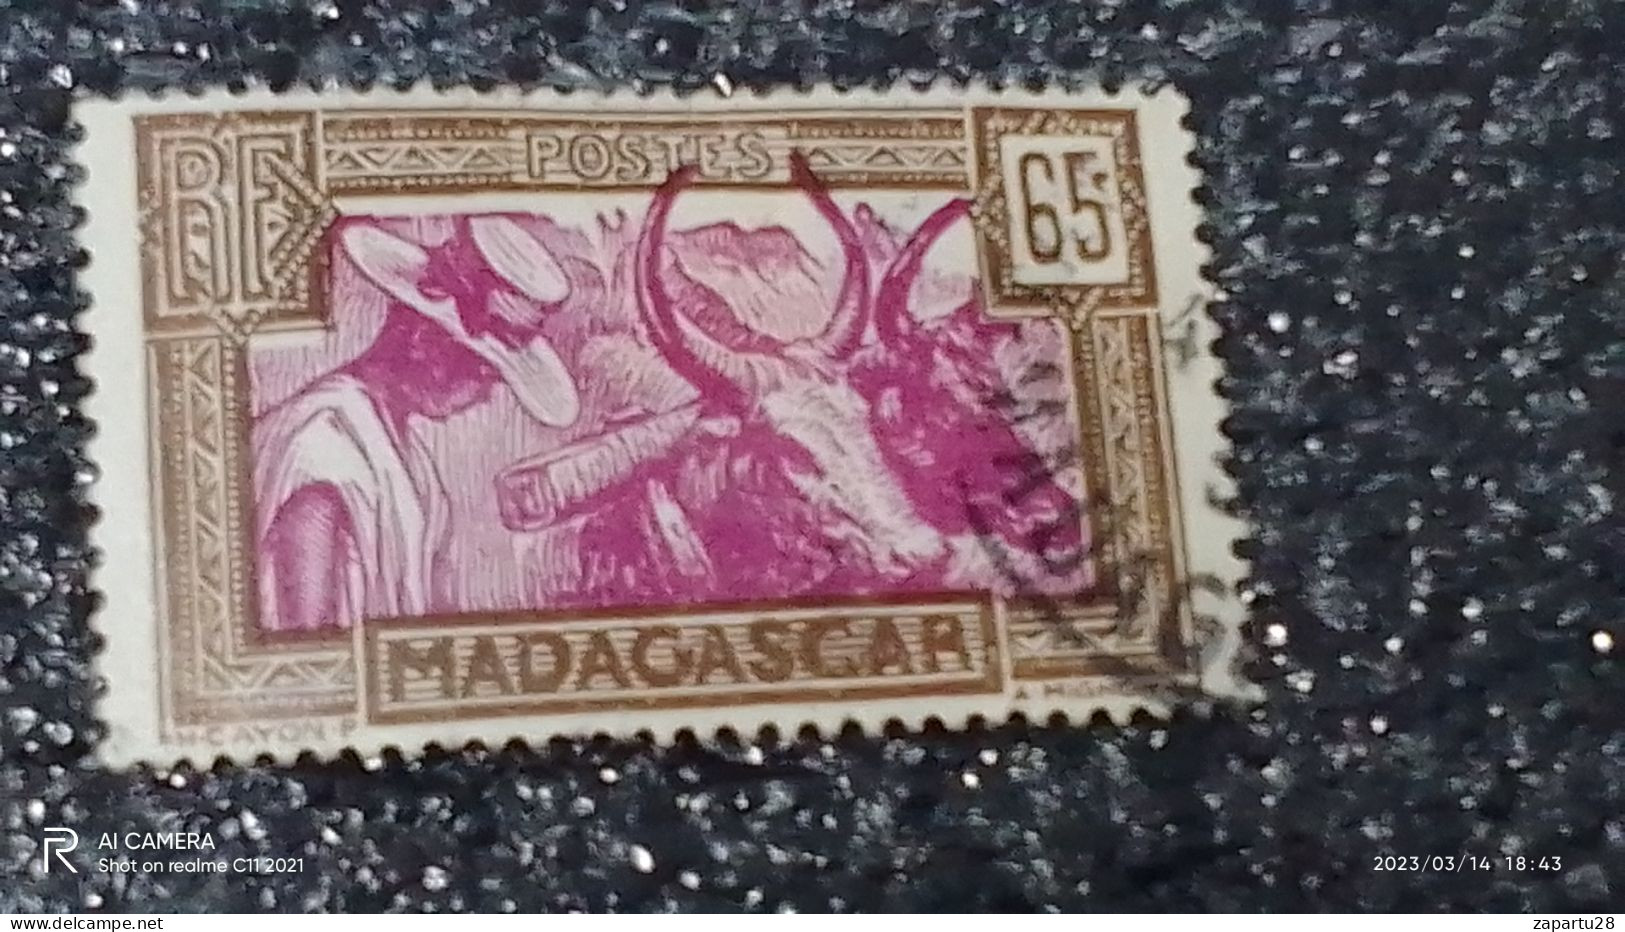 MADAGASKAR---  -1940-50-     65C   USED- - Gebraucht